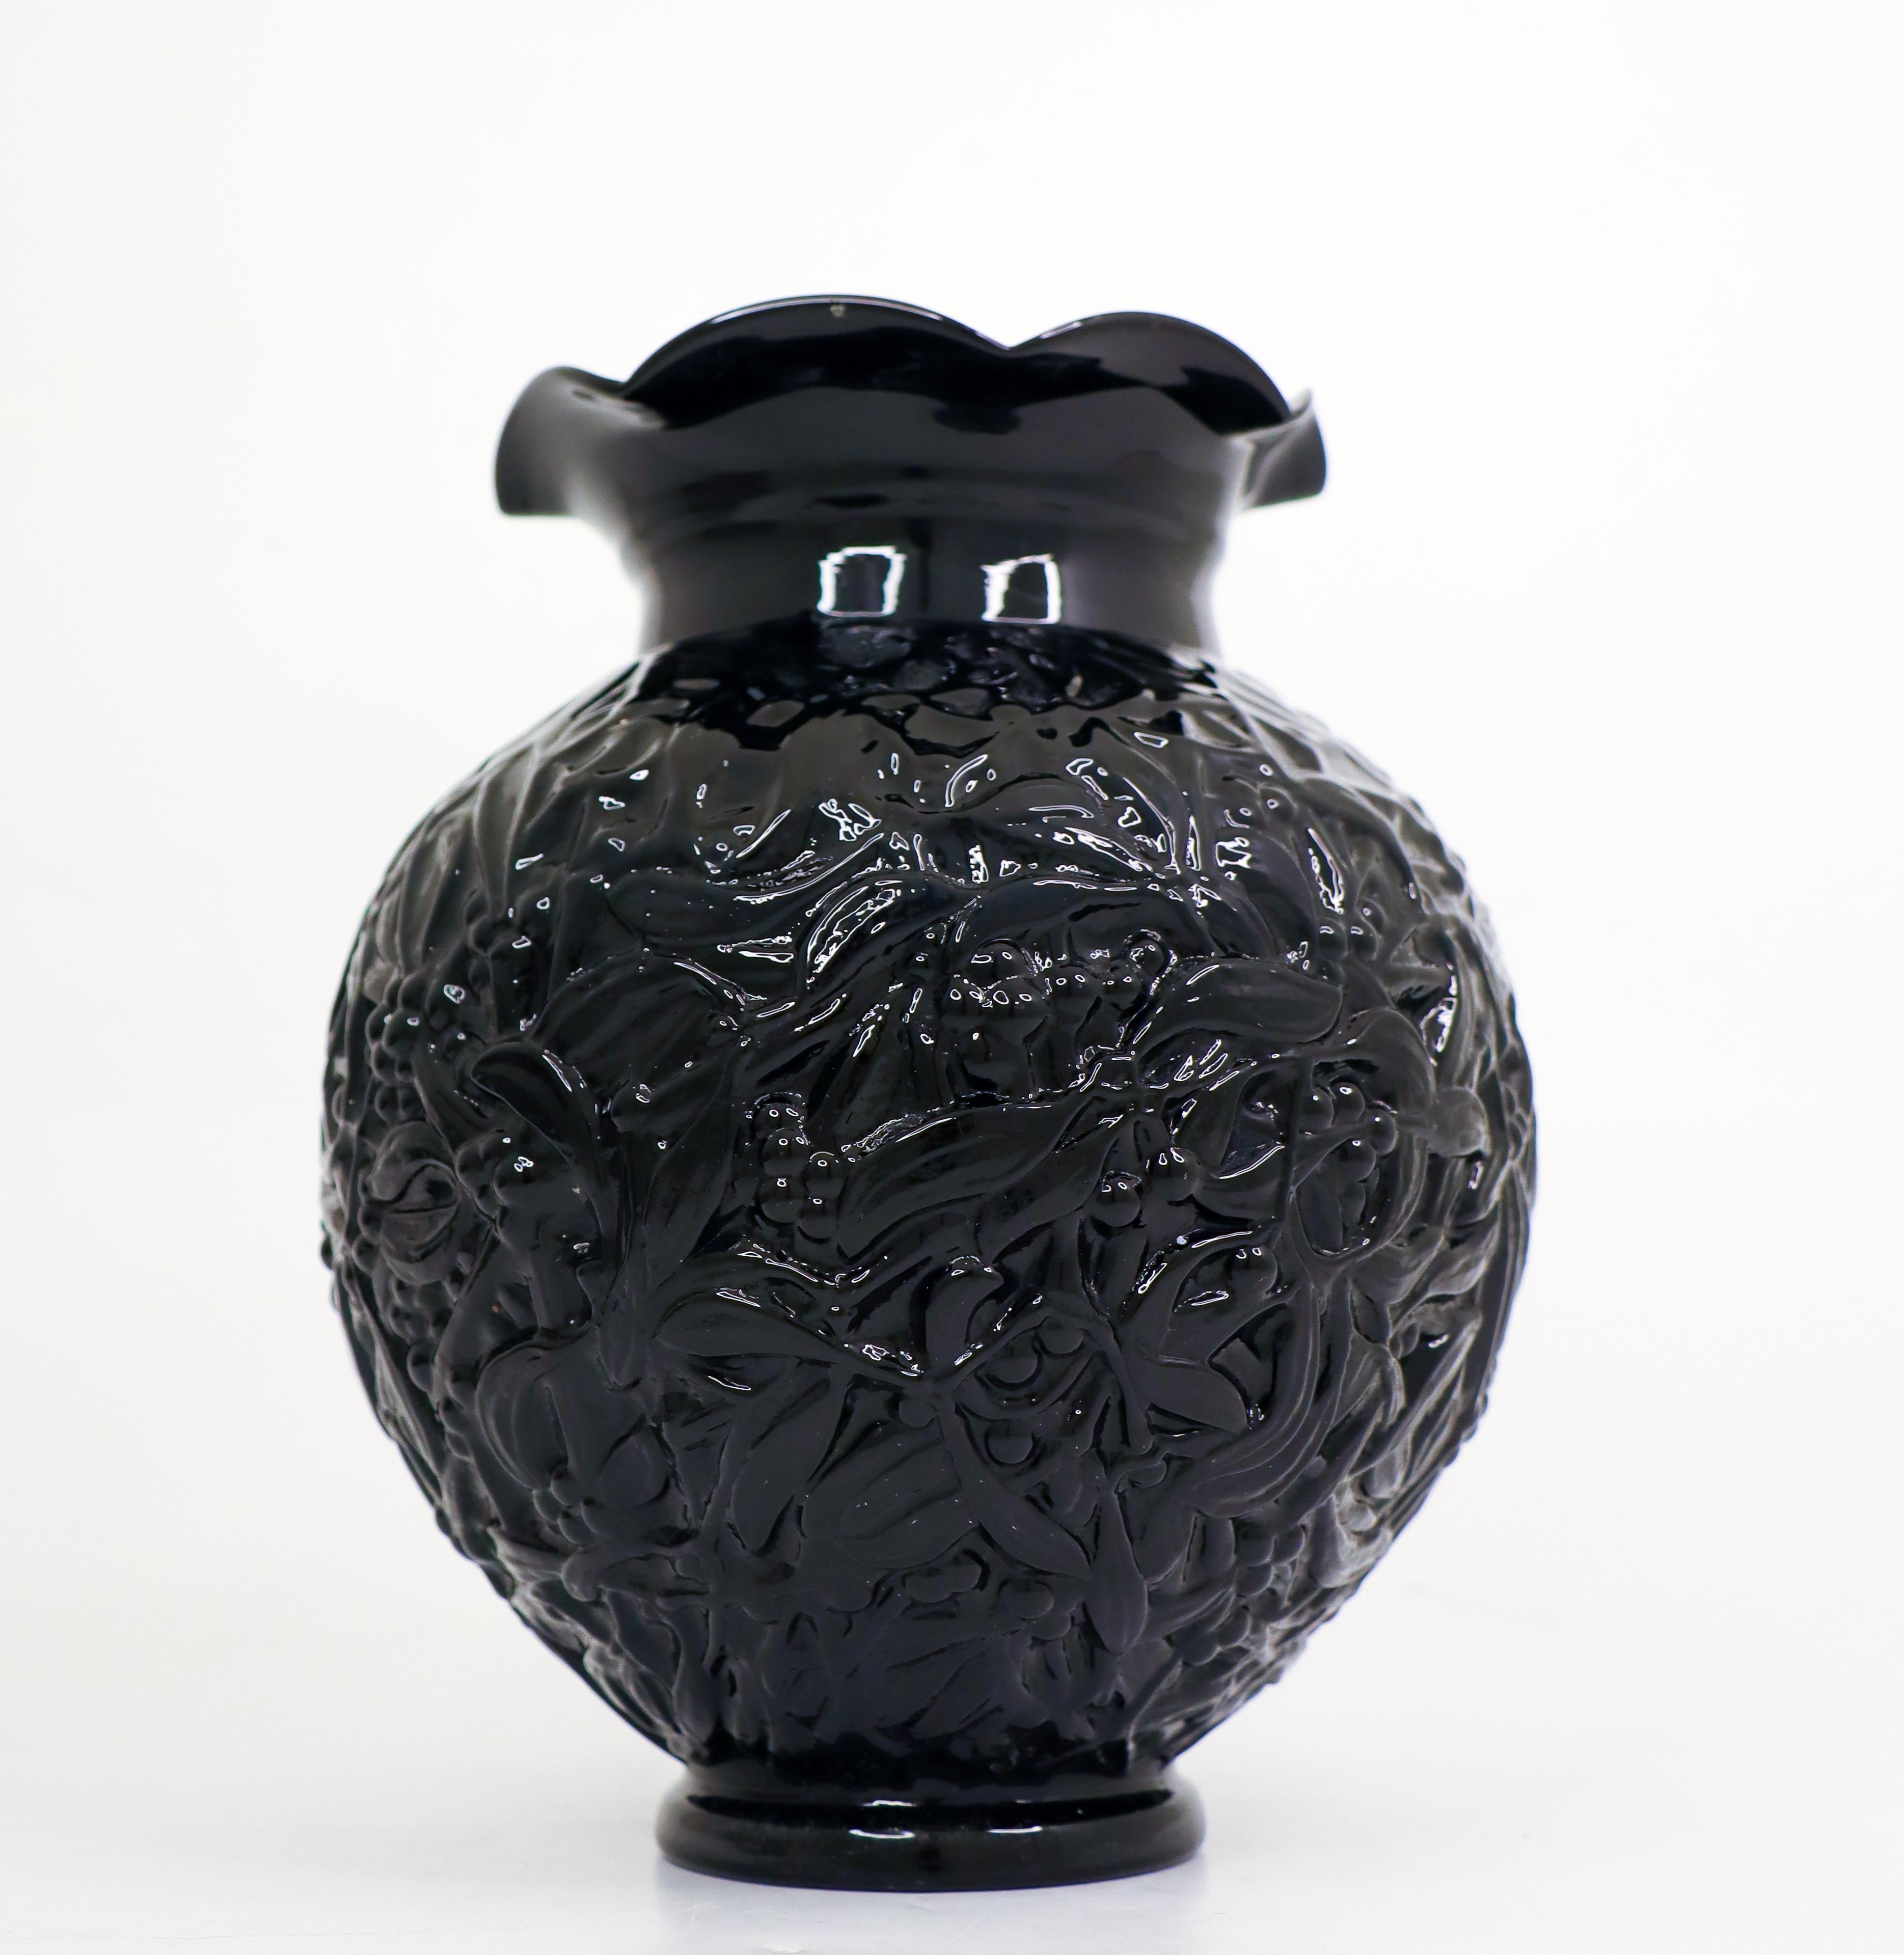 Scandinavian Modern Black Glass Vase - Edvin Ollers - Elme Glassworks, Sweden 1930s For Sale